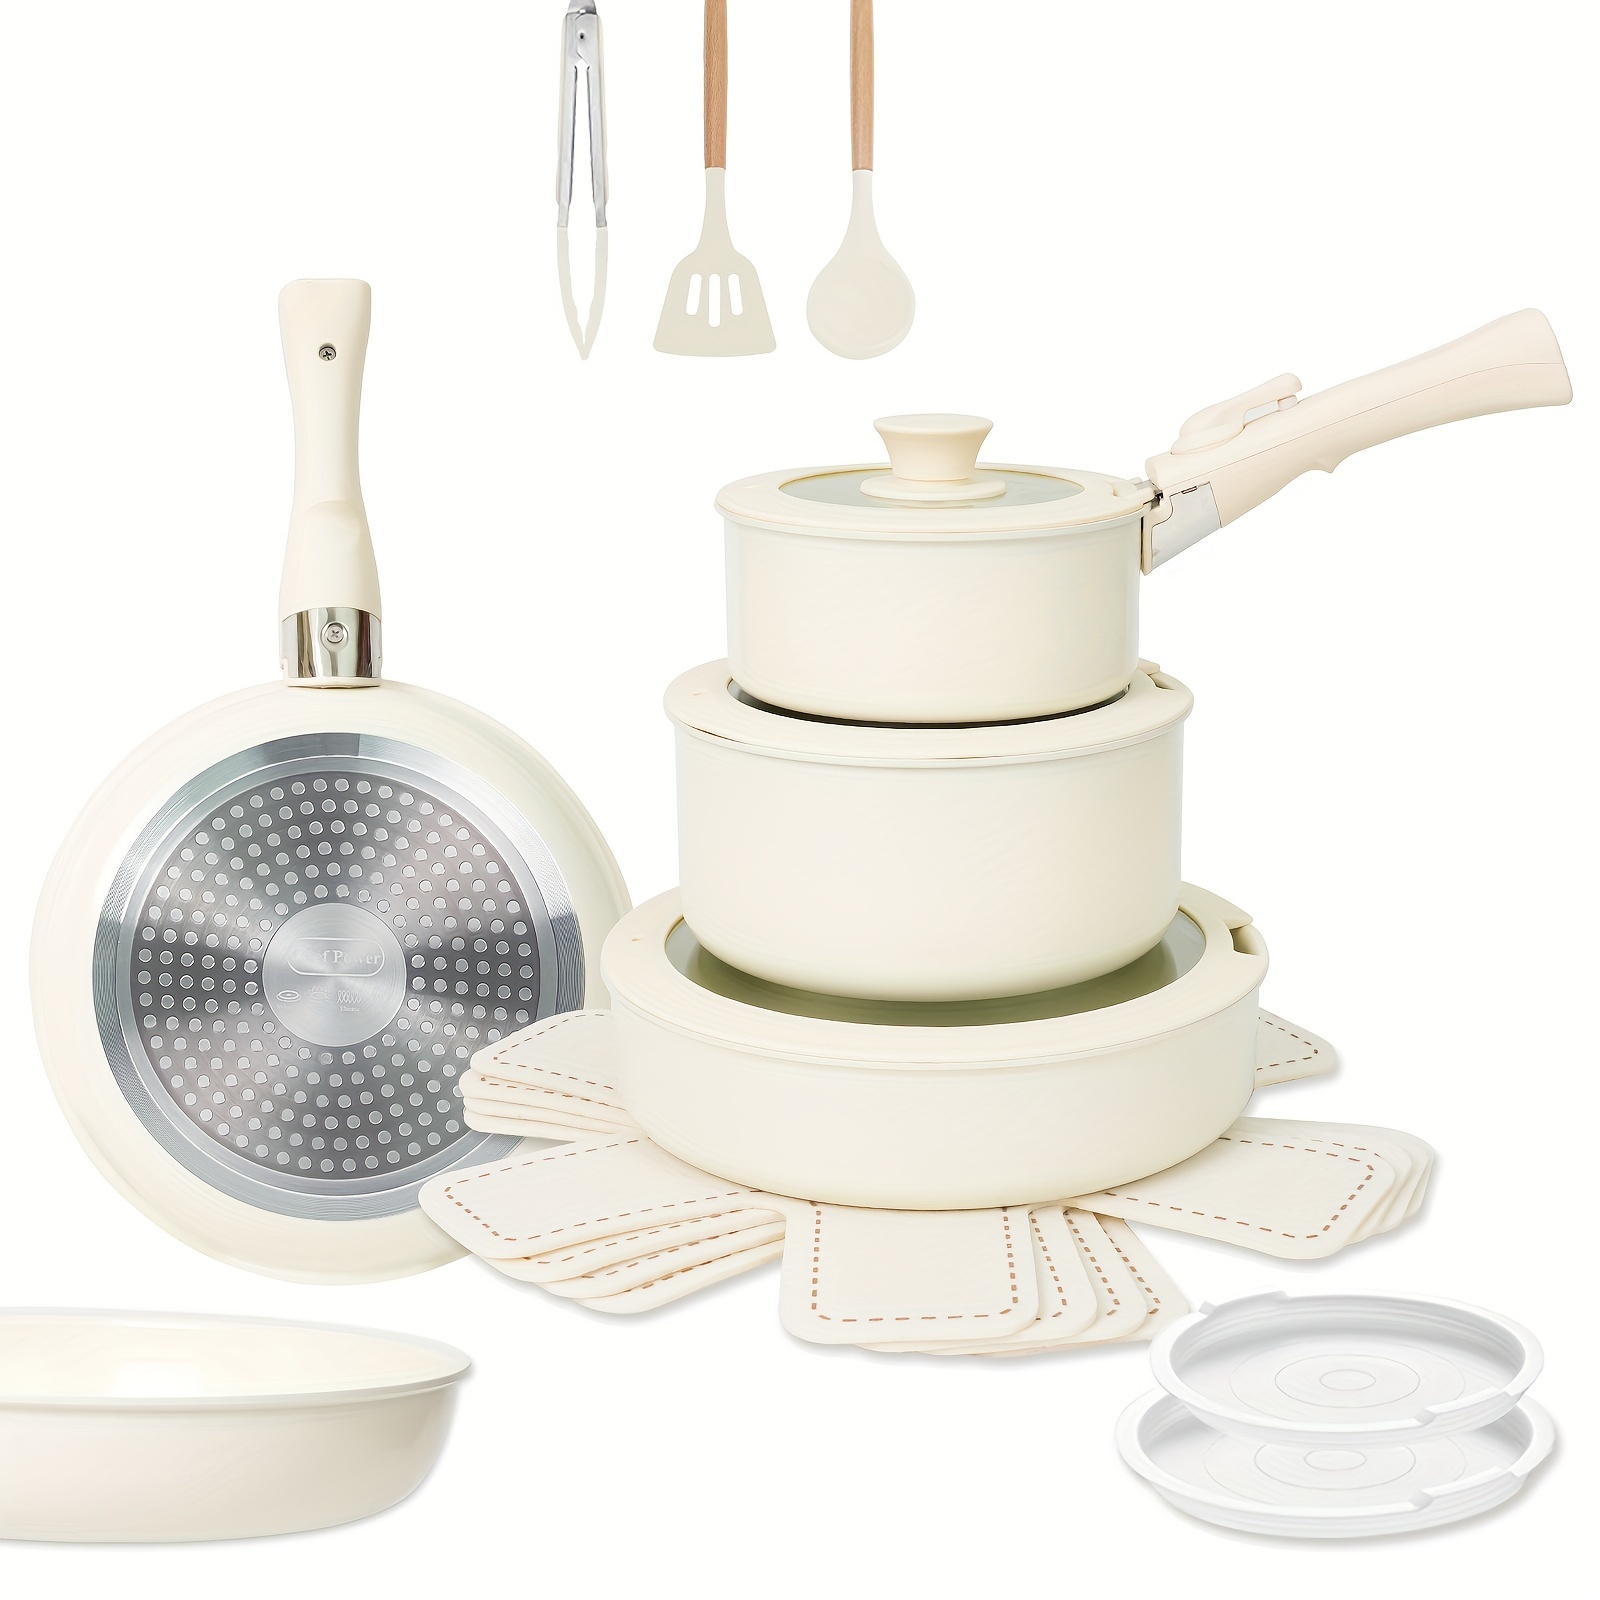 

19 Pcs Pots And Pans Set, Nonstick Kitchen Cookware Set With Detachable Handle, Induction Cookware, Dishwasher Oven Safe, Beige